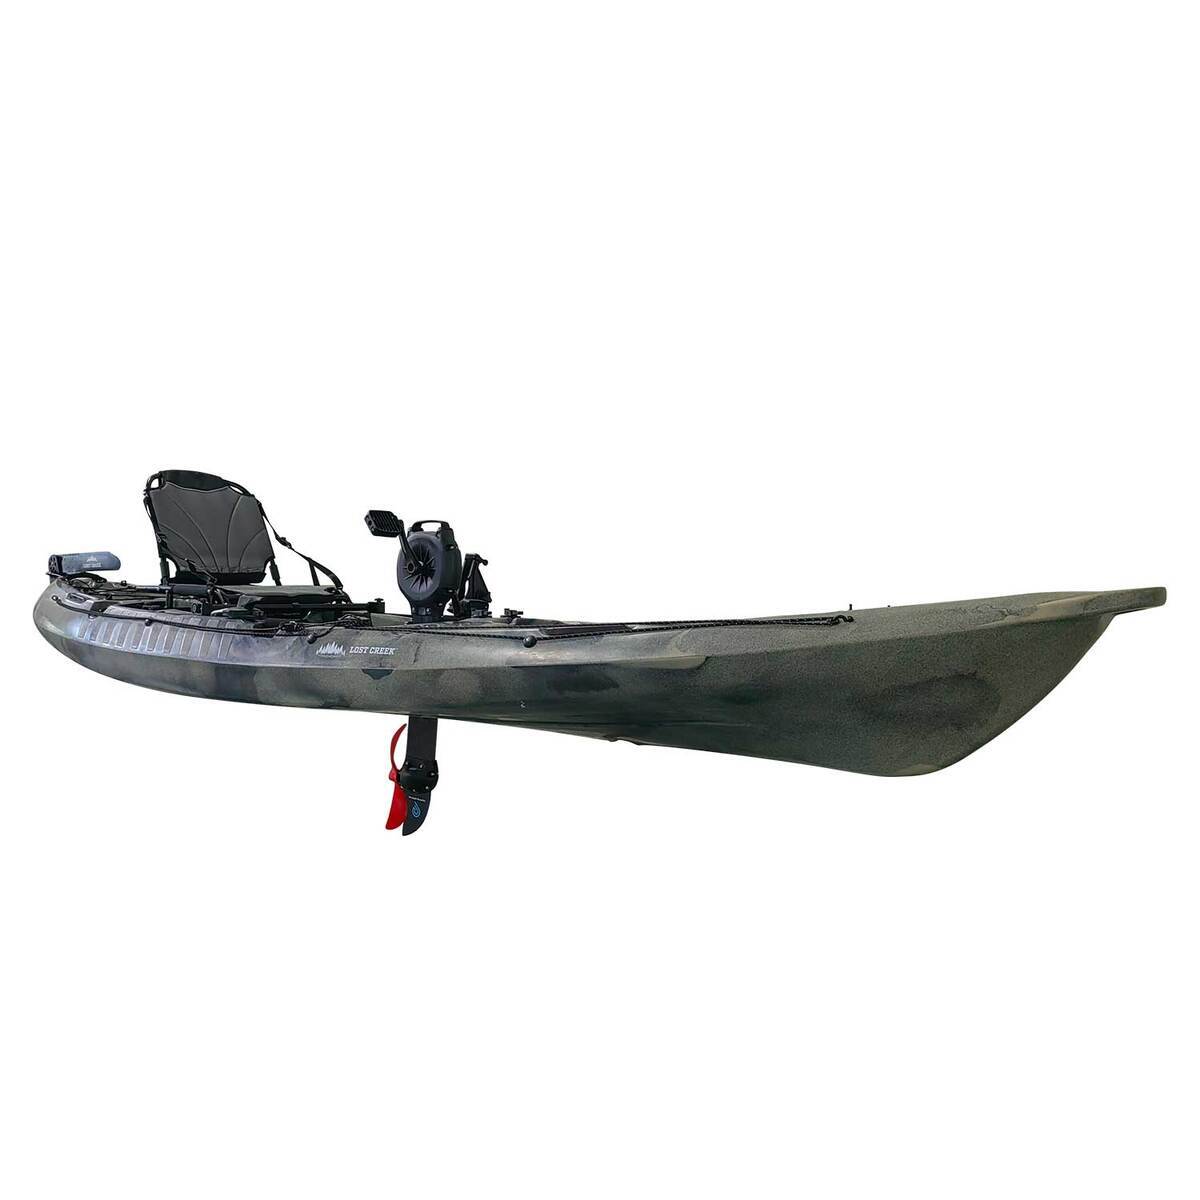 CROOKED CREEK 7-foot Fishing Kayak Paddle, Camo - Georgia